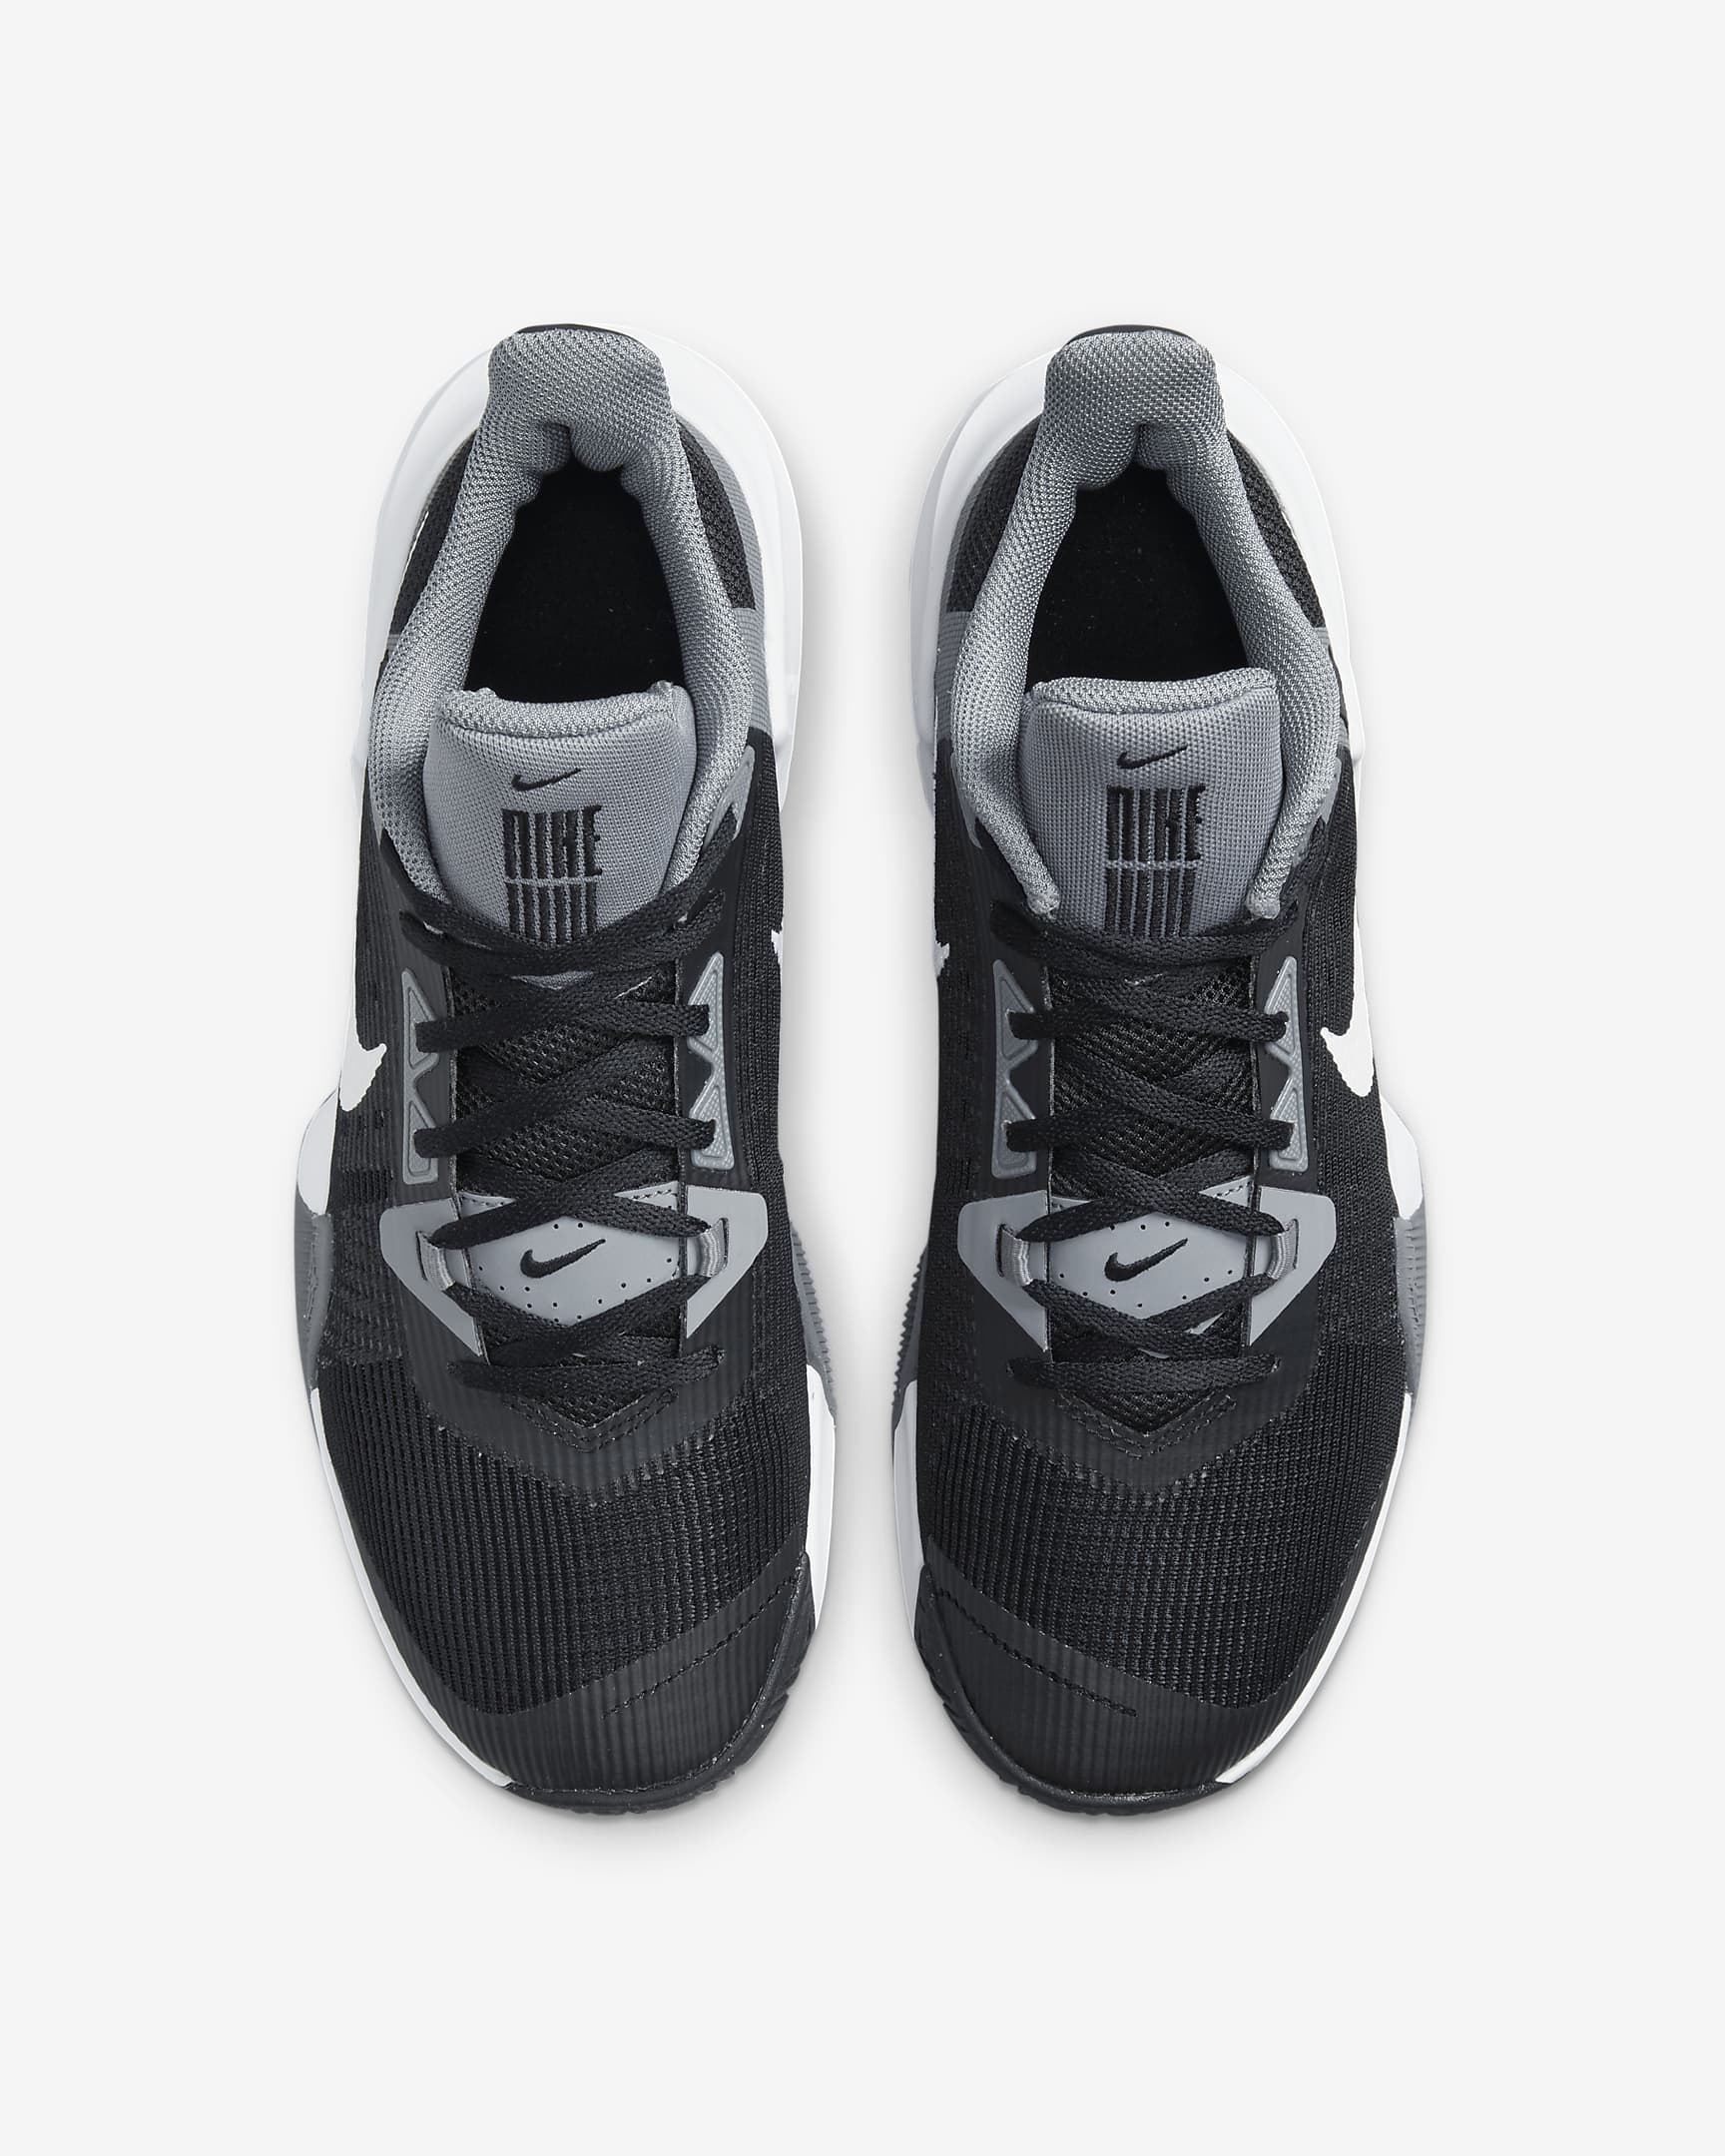 Nike Impact 3 Basketball Shoe - Black/Cool Grey/White